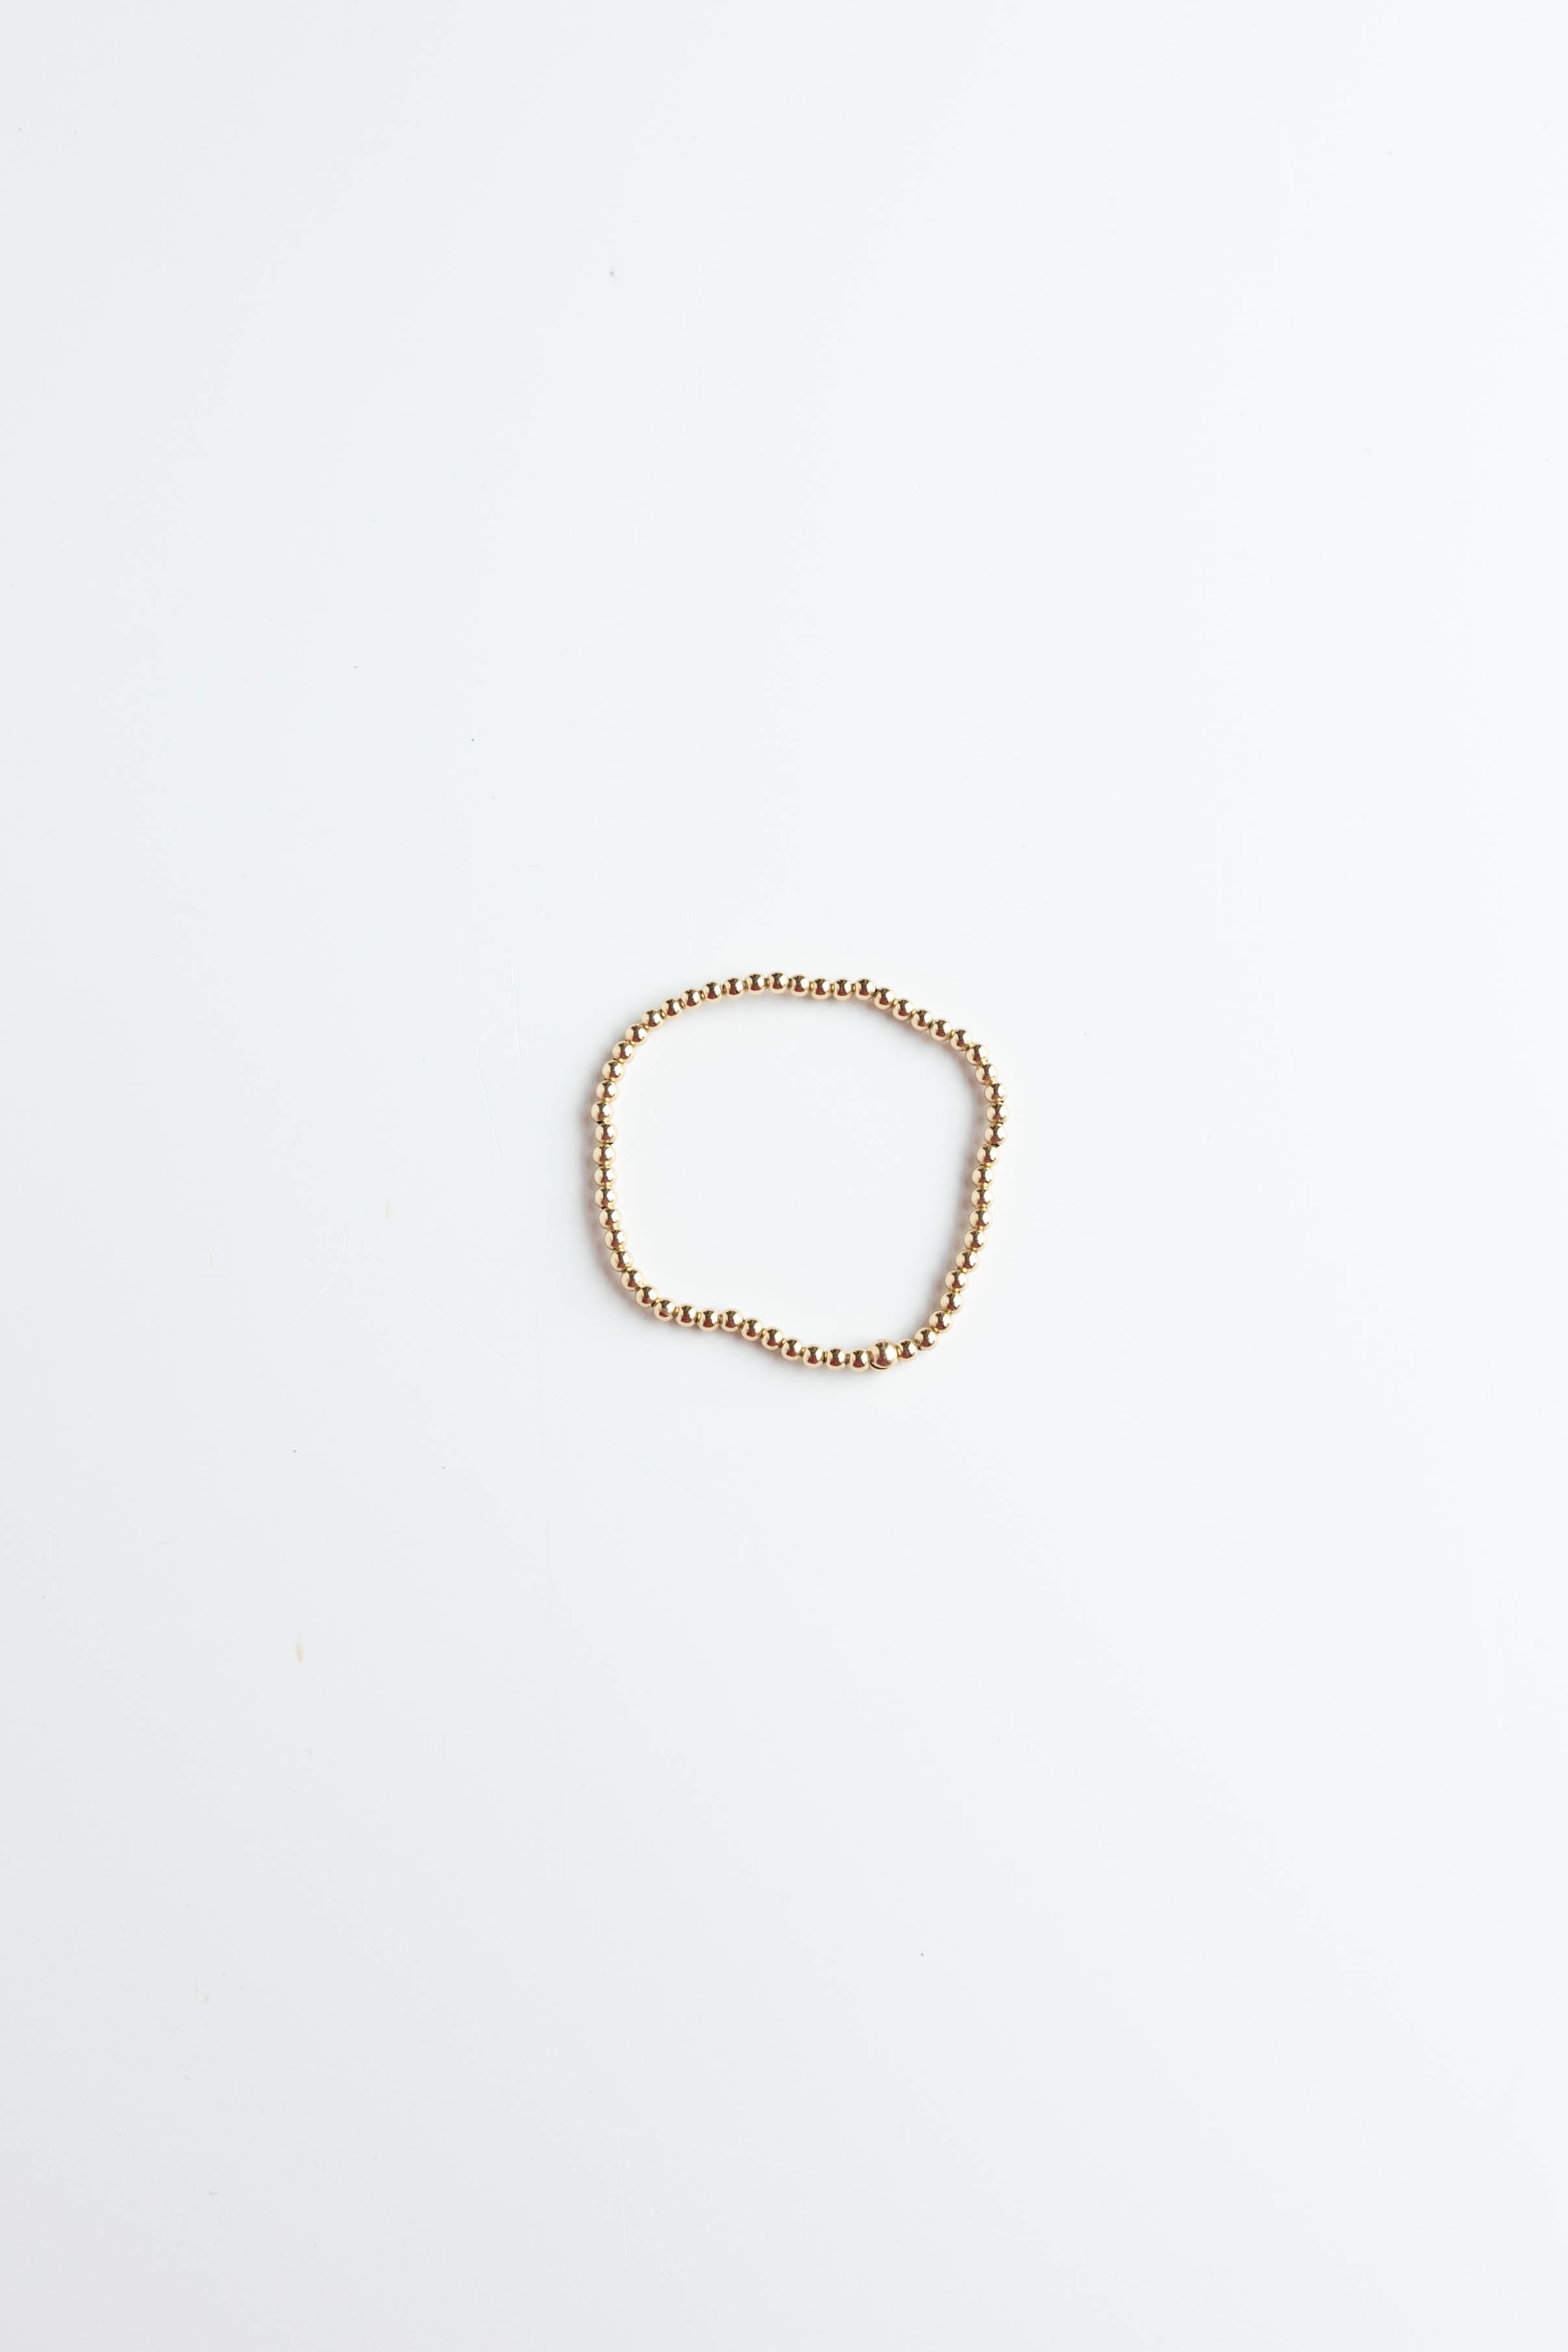 Small Gold Beaded Stretchy Bracelet